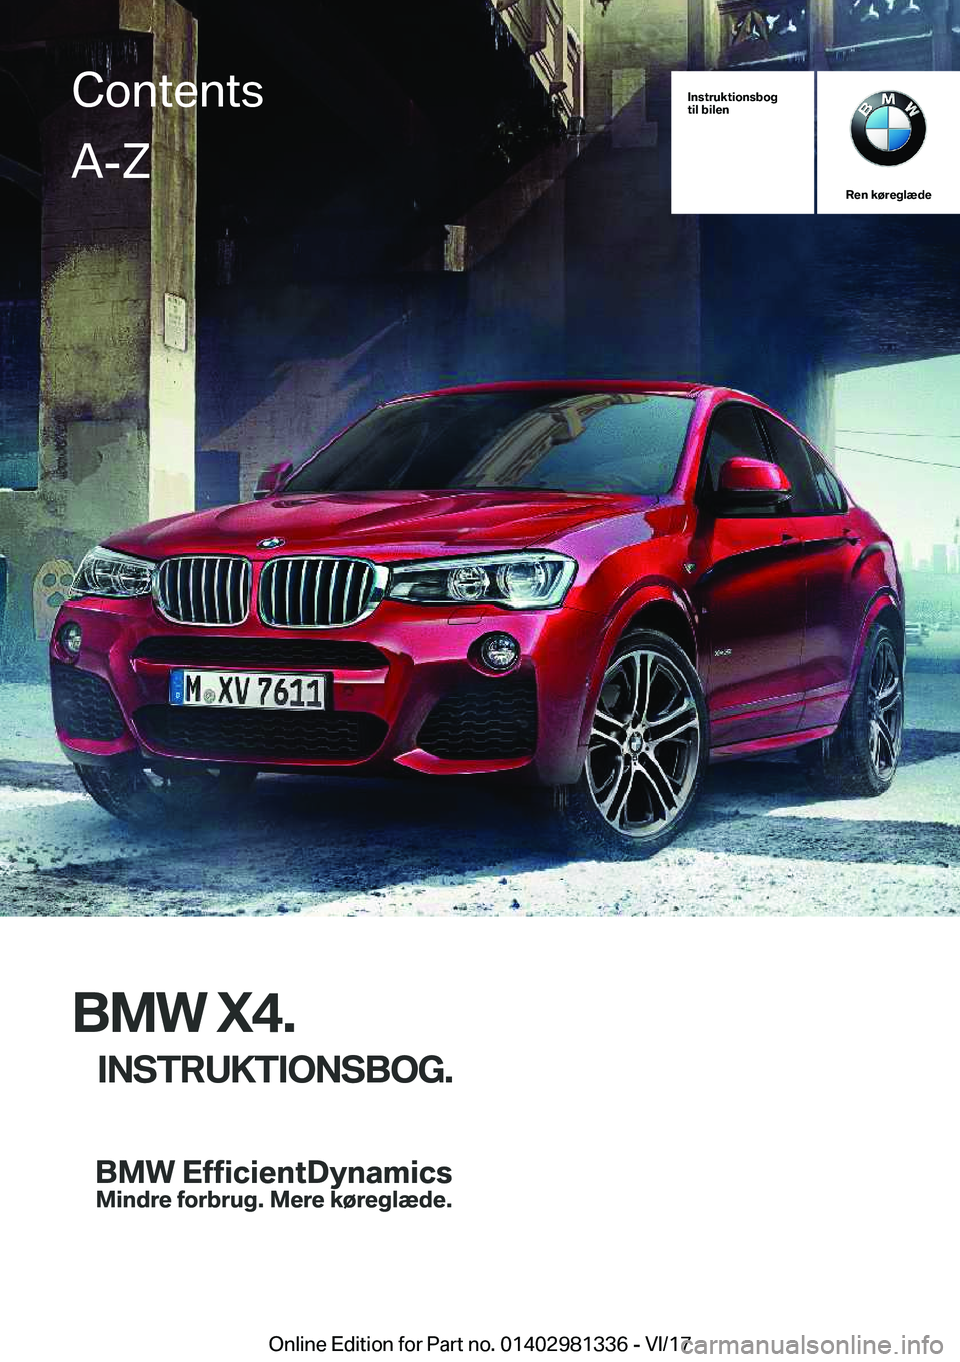 BMW X4 2018  InstruktionsbØger (in Danish) �I�n�s�t�r�u�k�t�i�o�n�s�b�o�g
�t�i�l��b�i�l�e�n
�R�e�n��k�